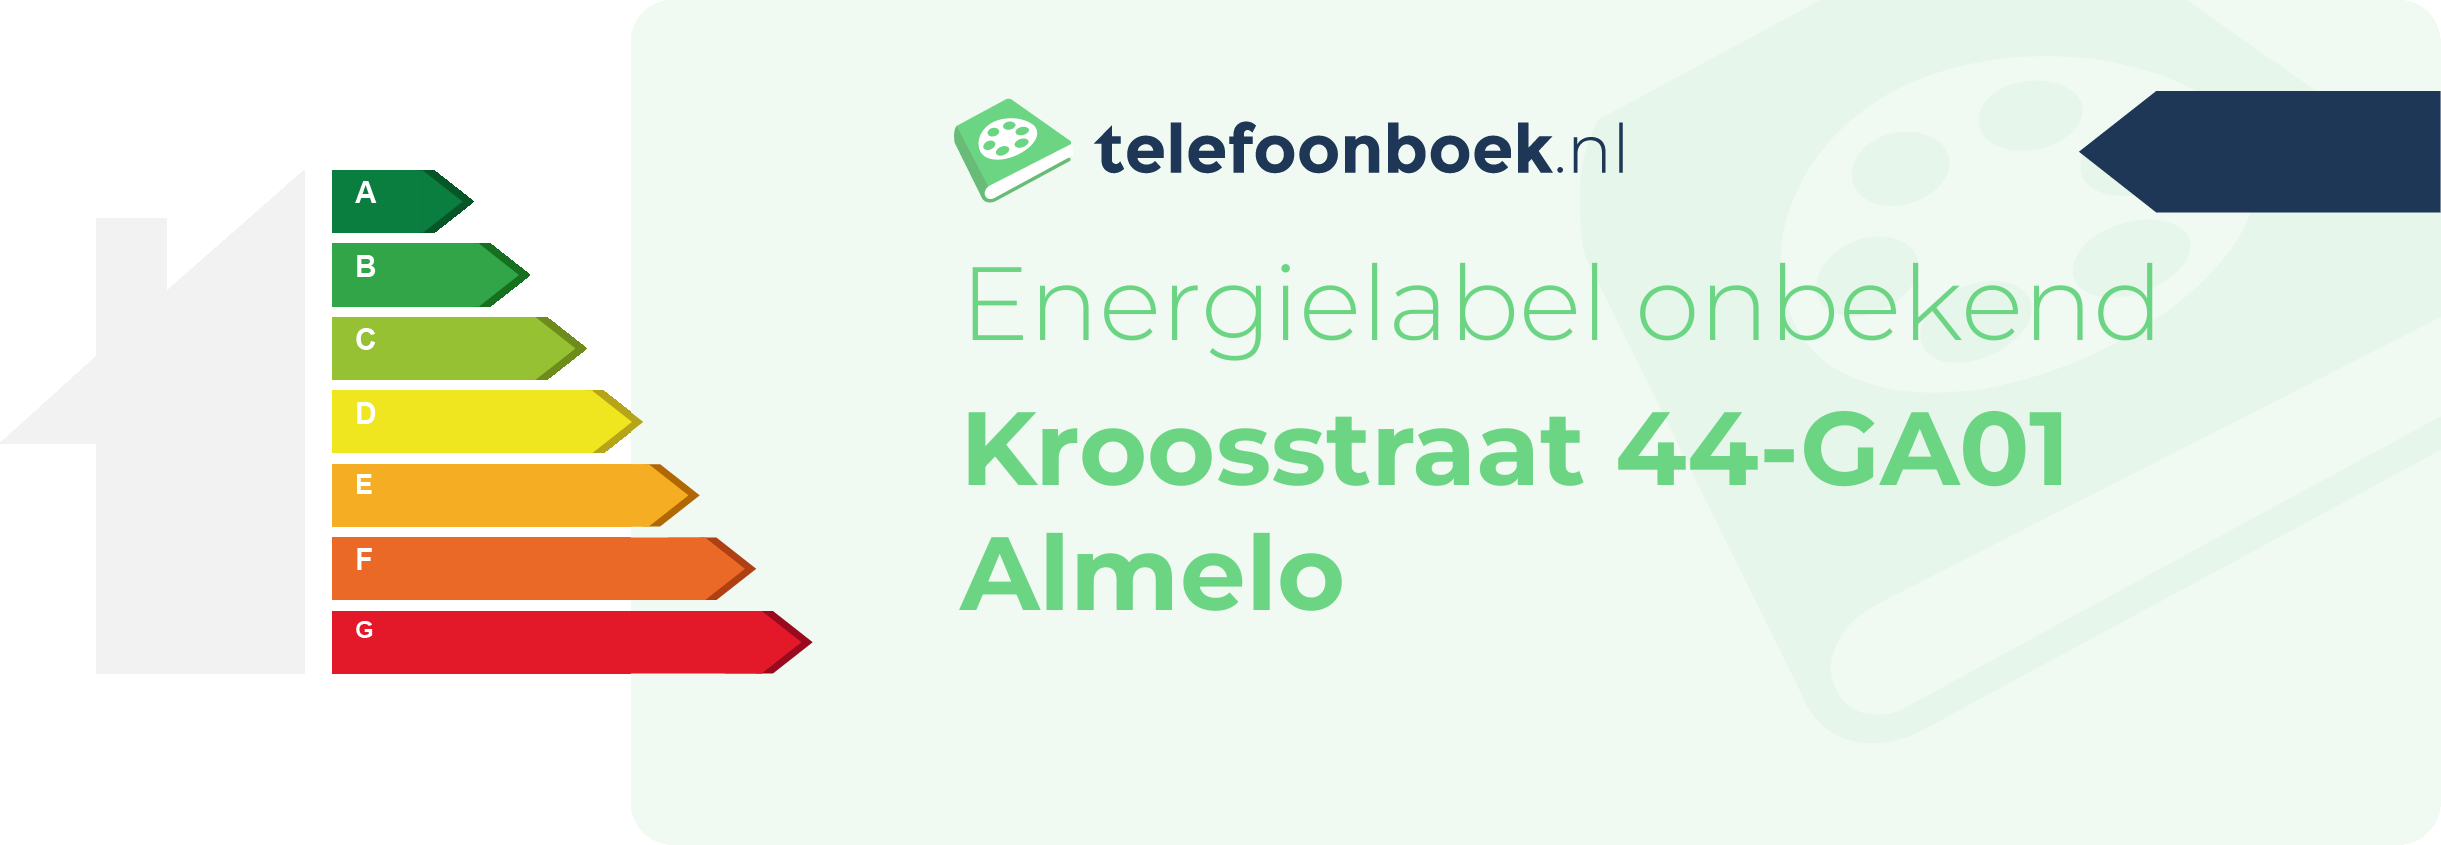 Energielabel Kroosstraat 44-GA01 Almelo